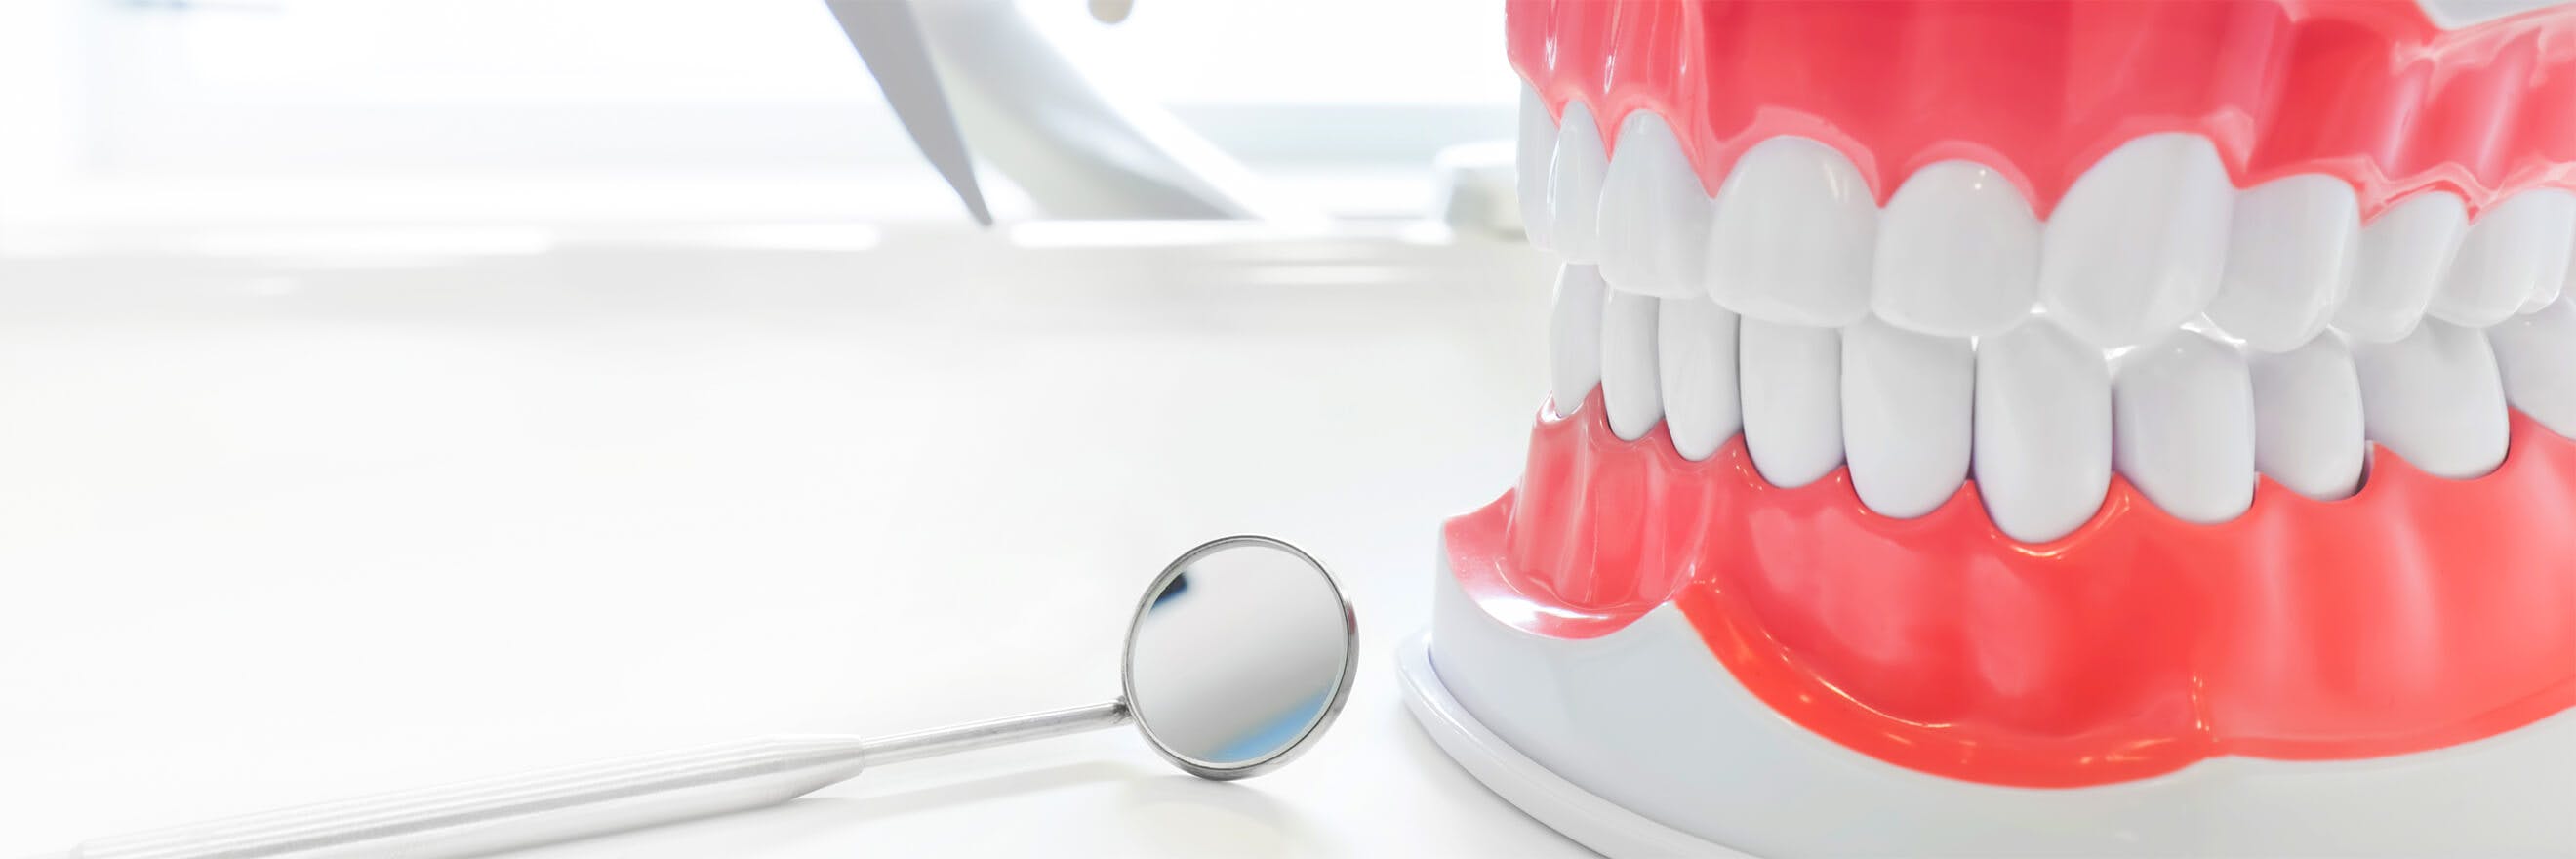 Full set of teeth model, with a dentist mirror tool